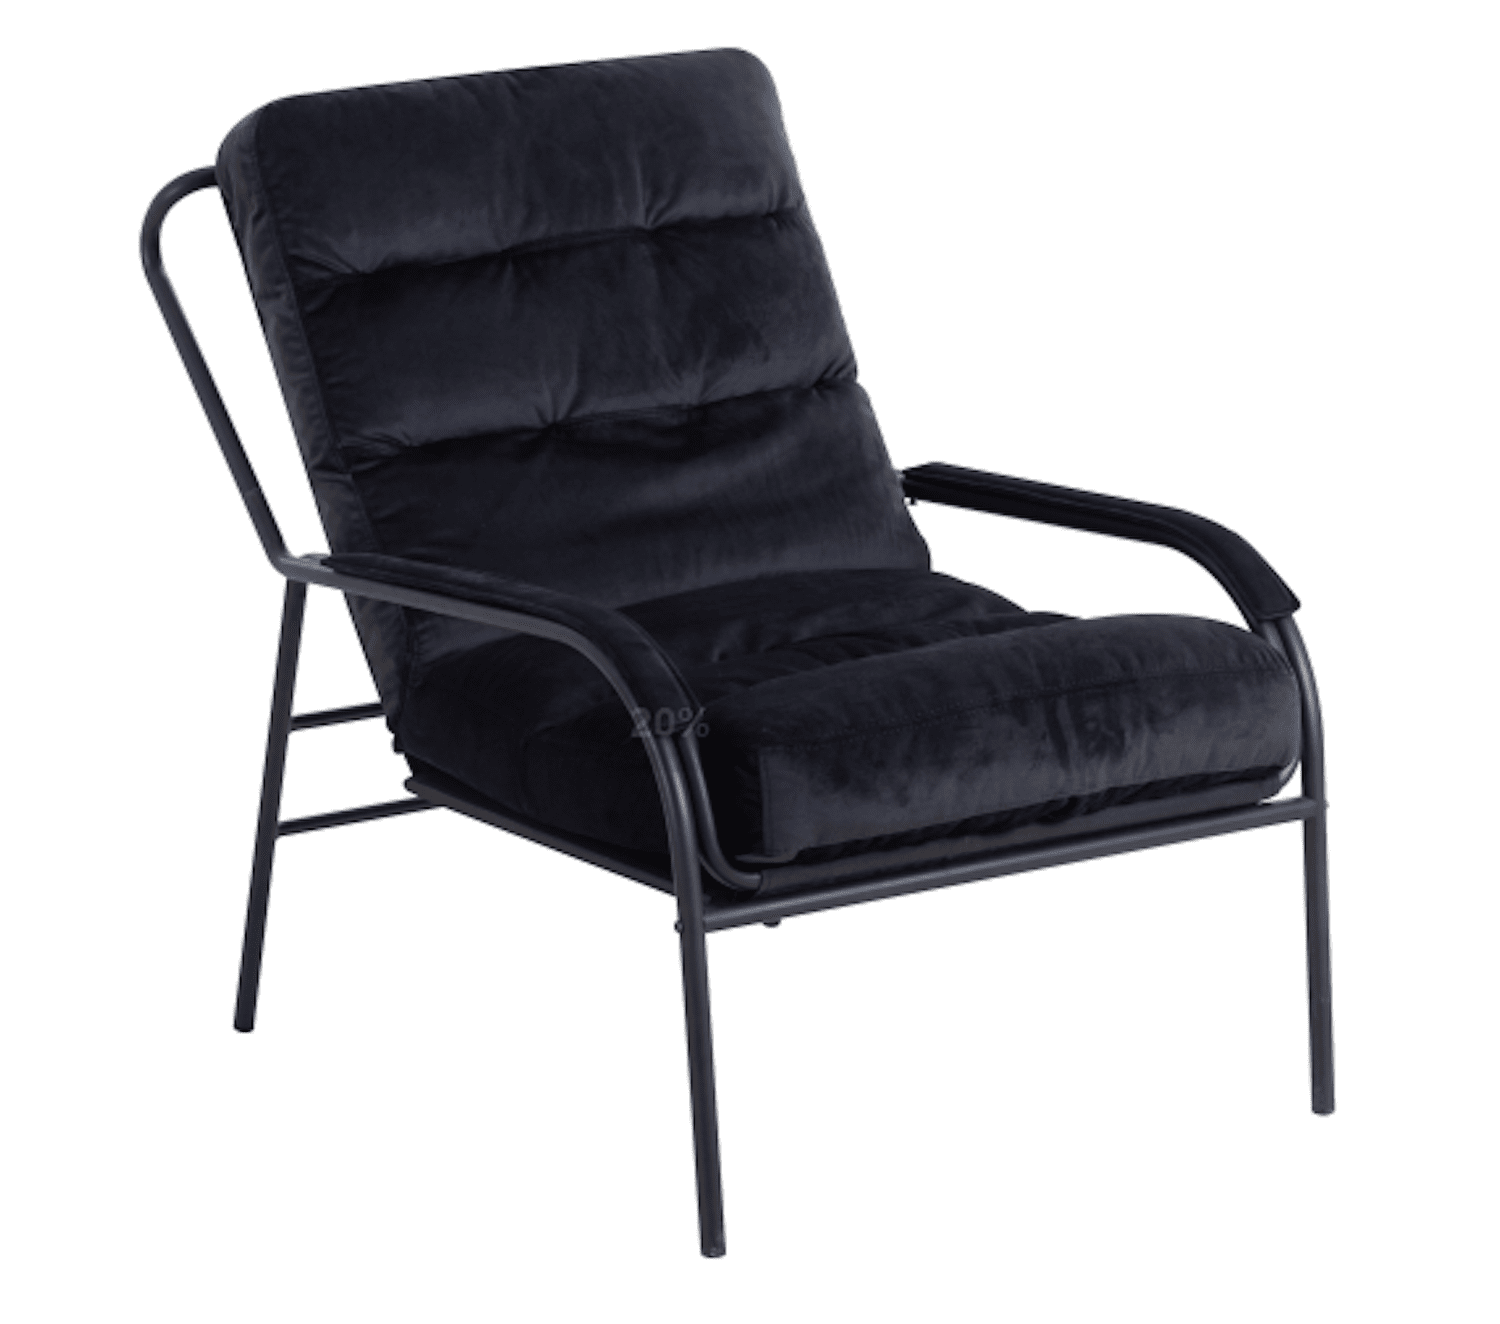 Justone Recline Back Club Chair - Black